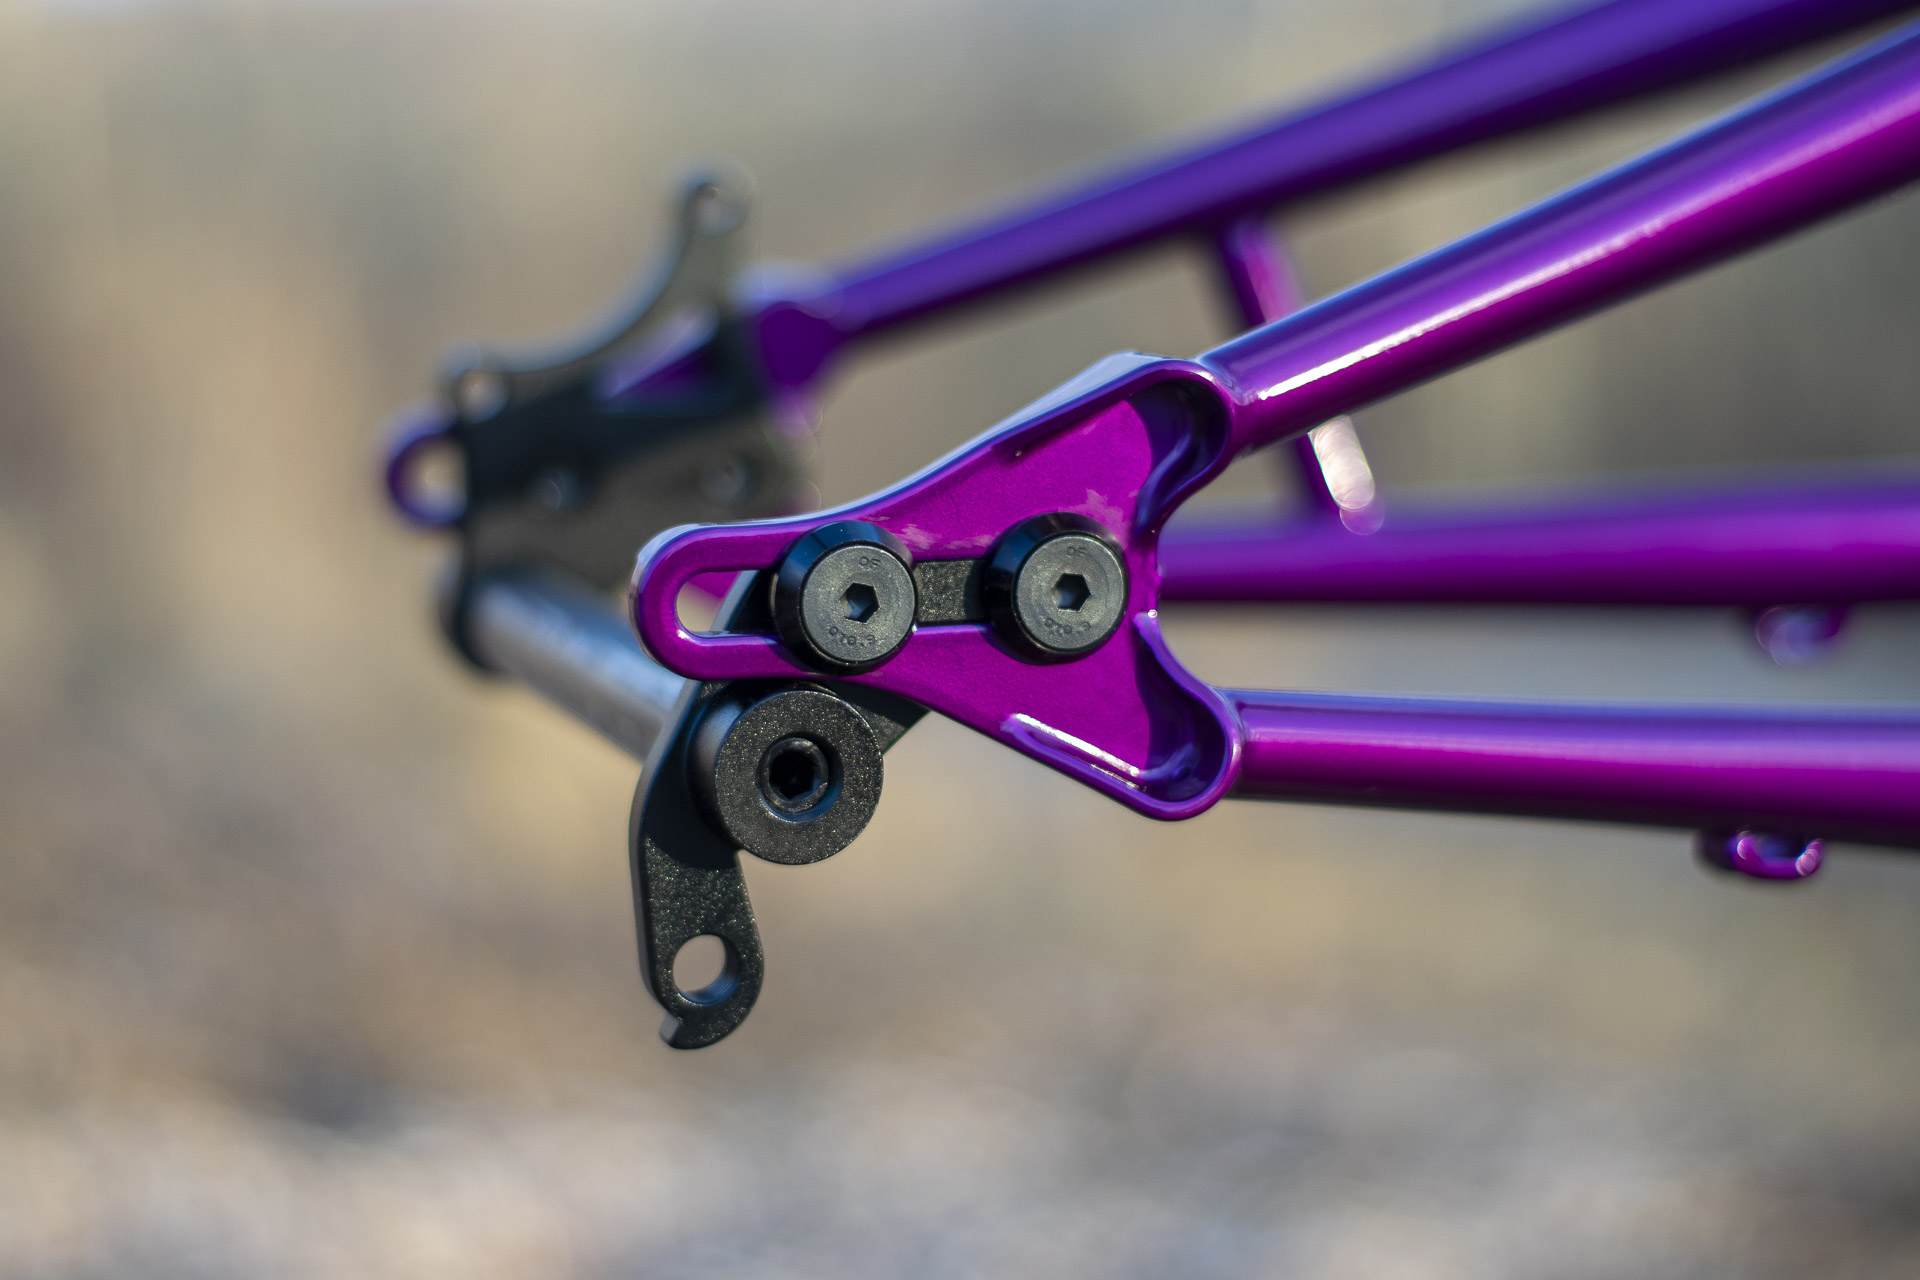 chromoly steel full suspension mountain bike frame dropout hardware upgrade kit